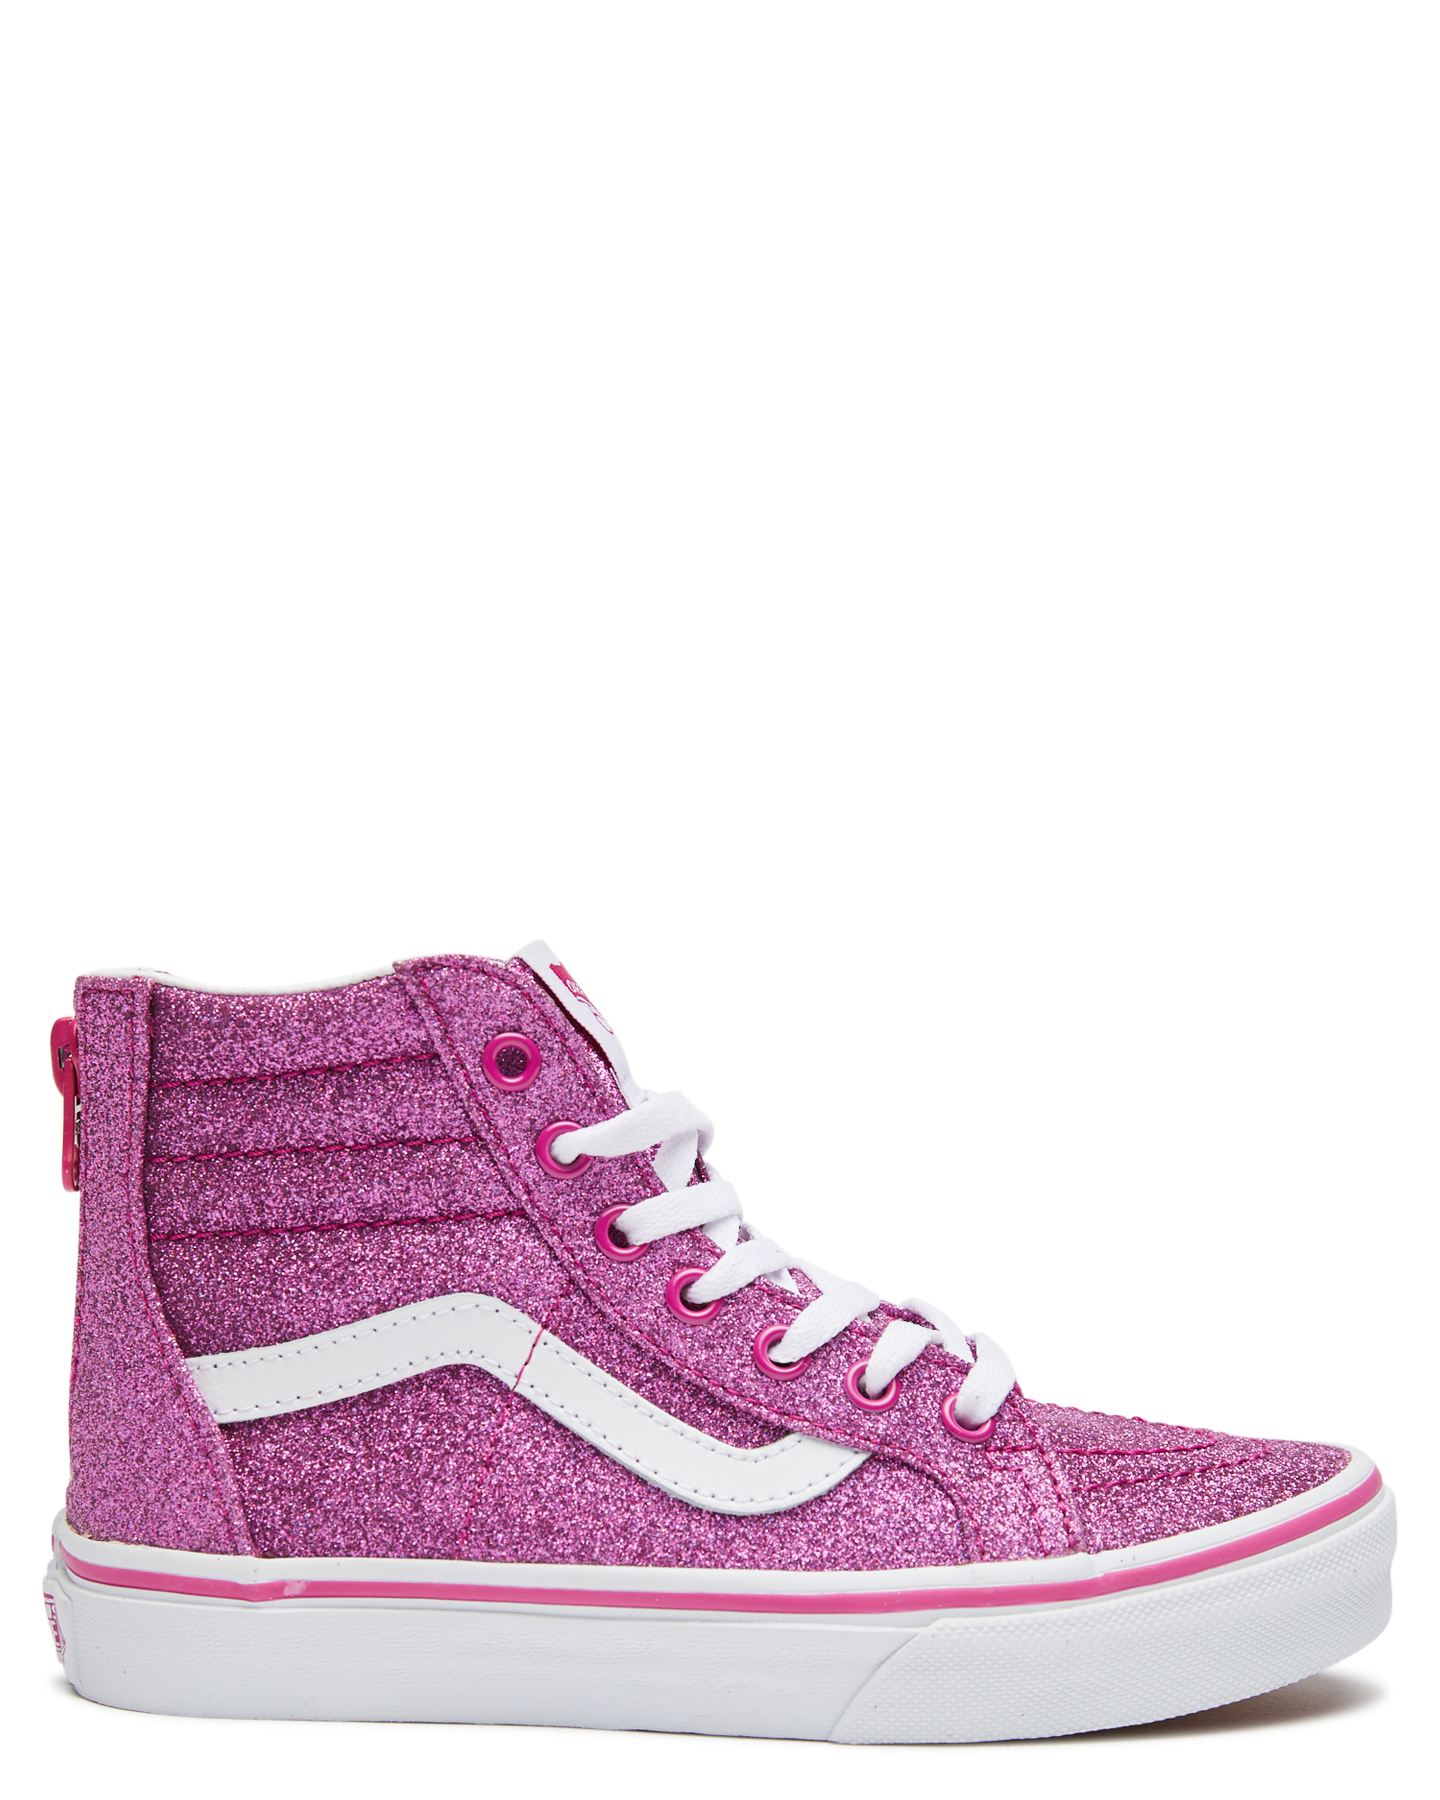 Vans Girls Sk8 Hi Zip Shoe - Youth - Pink | SurfStitch